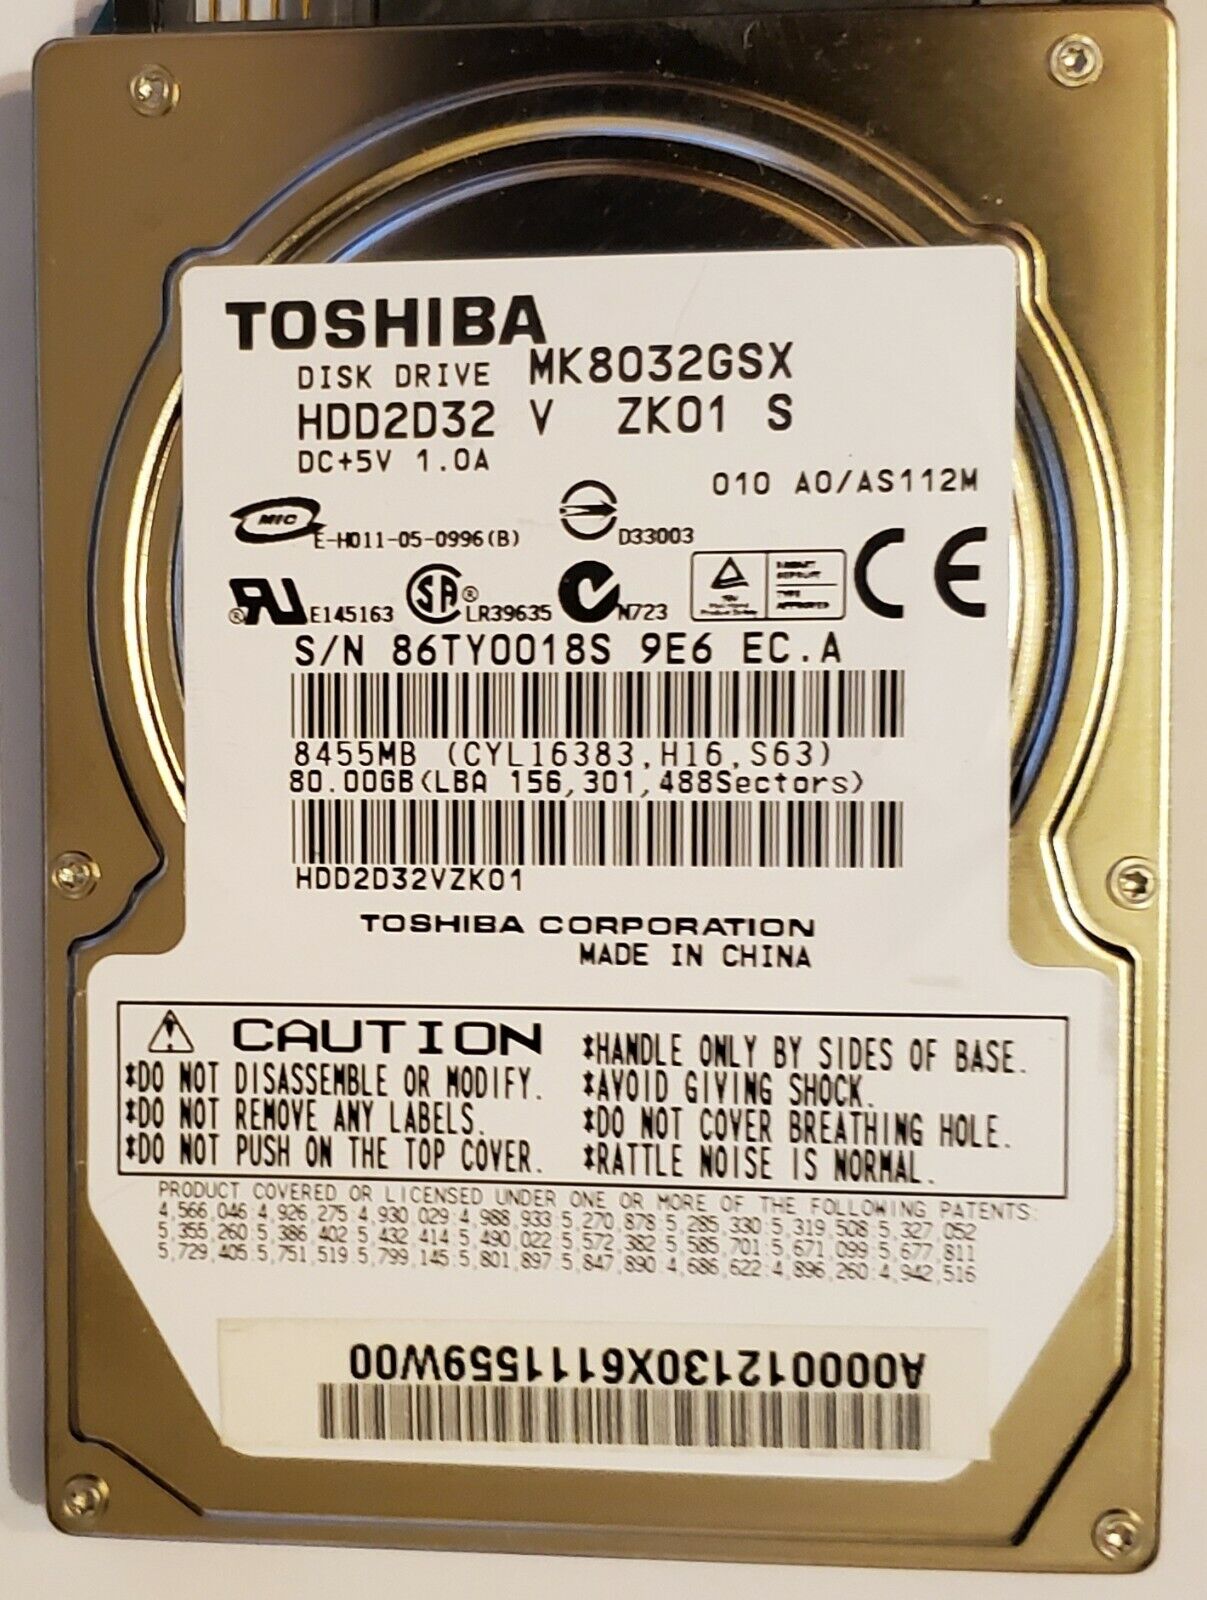 Toshiba MK8032GSX 80GB SATA Internal 5400RPM 2.5